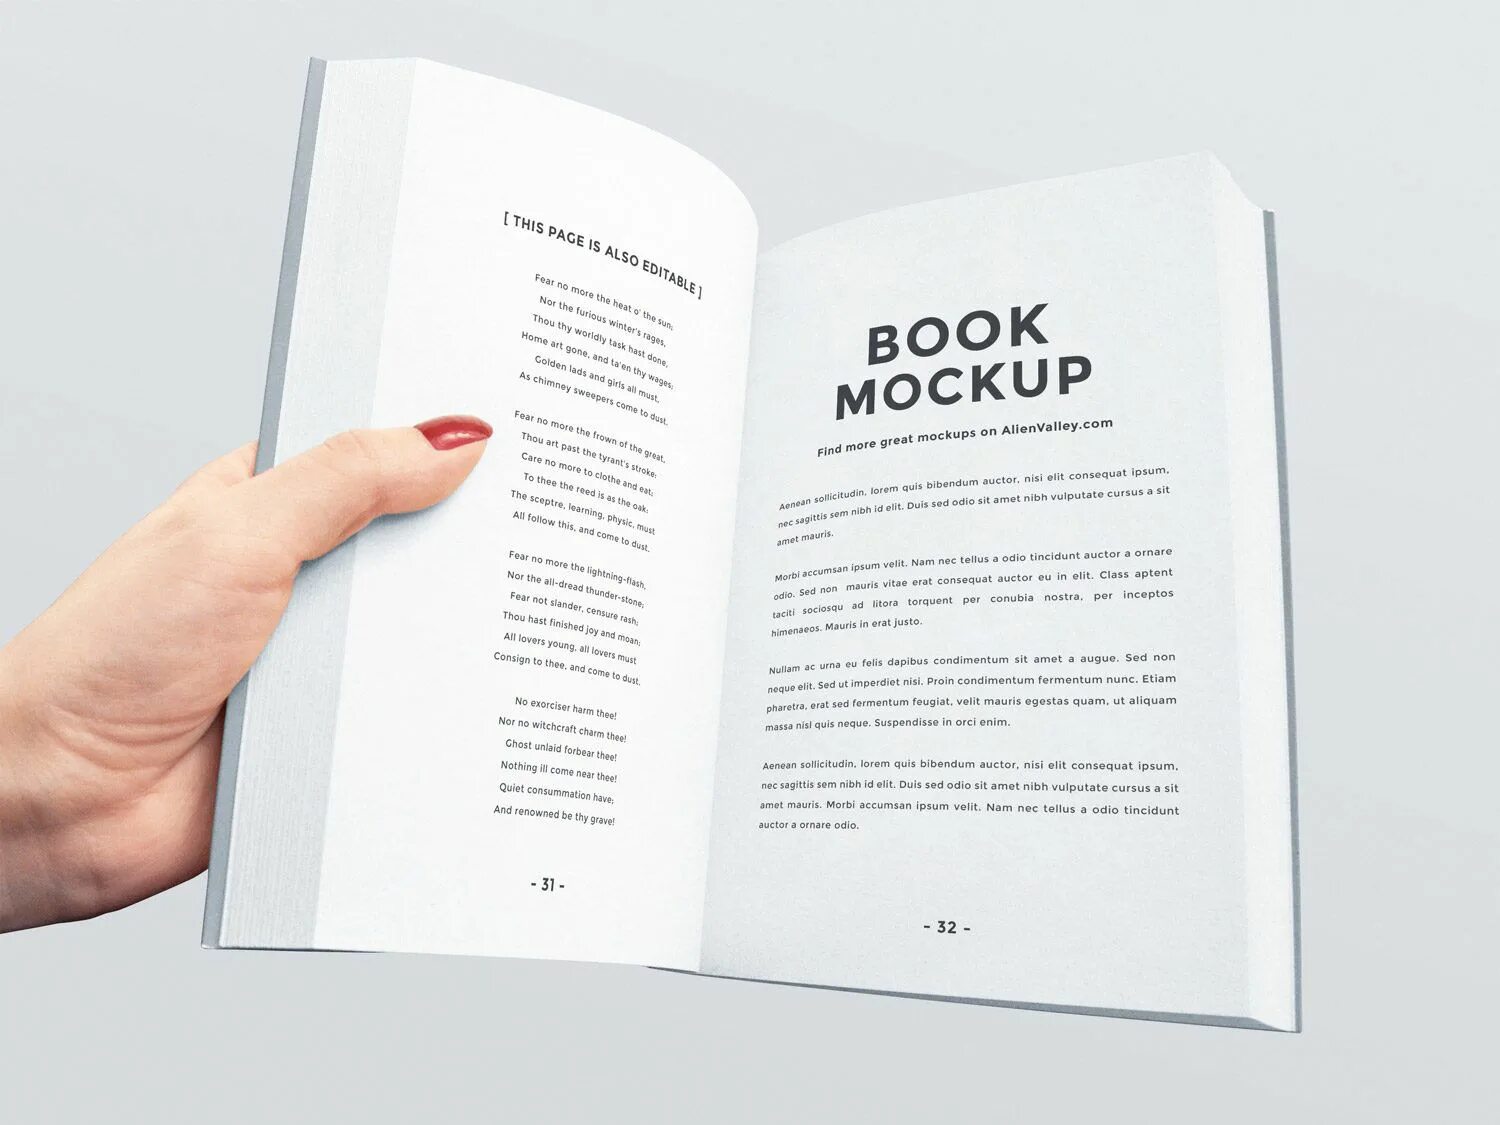 Верстка книги. Мокап книги. Дизайн обложки книги раскрытая. Открытая книга Mockup. I opened the book